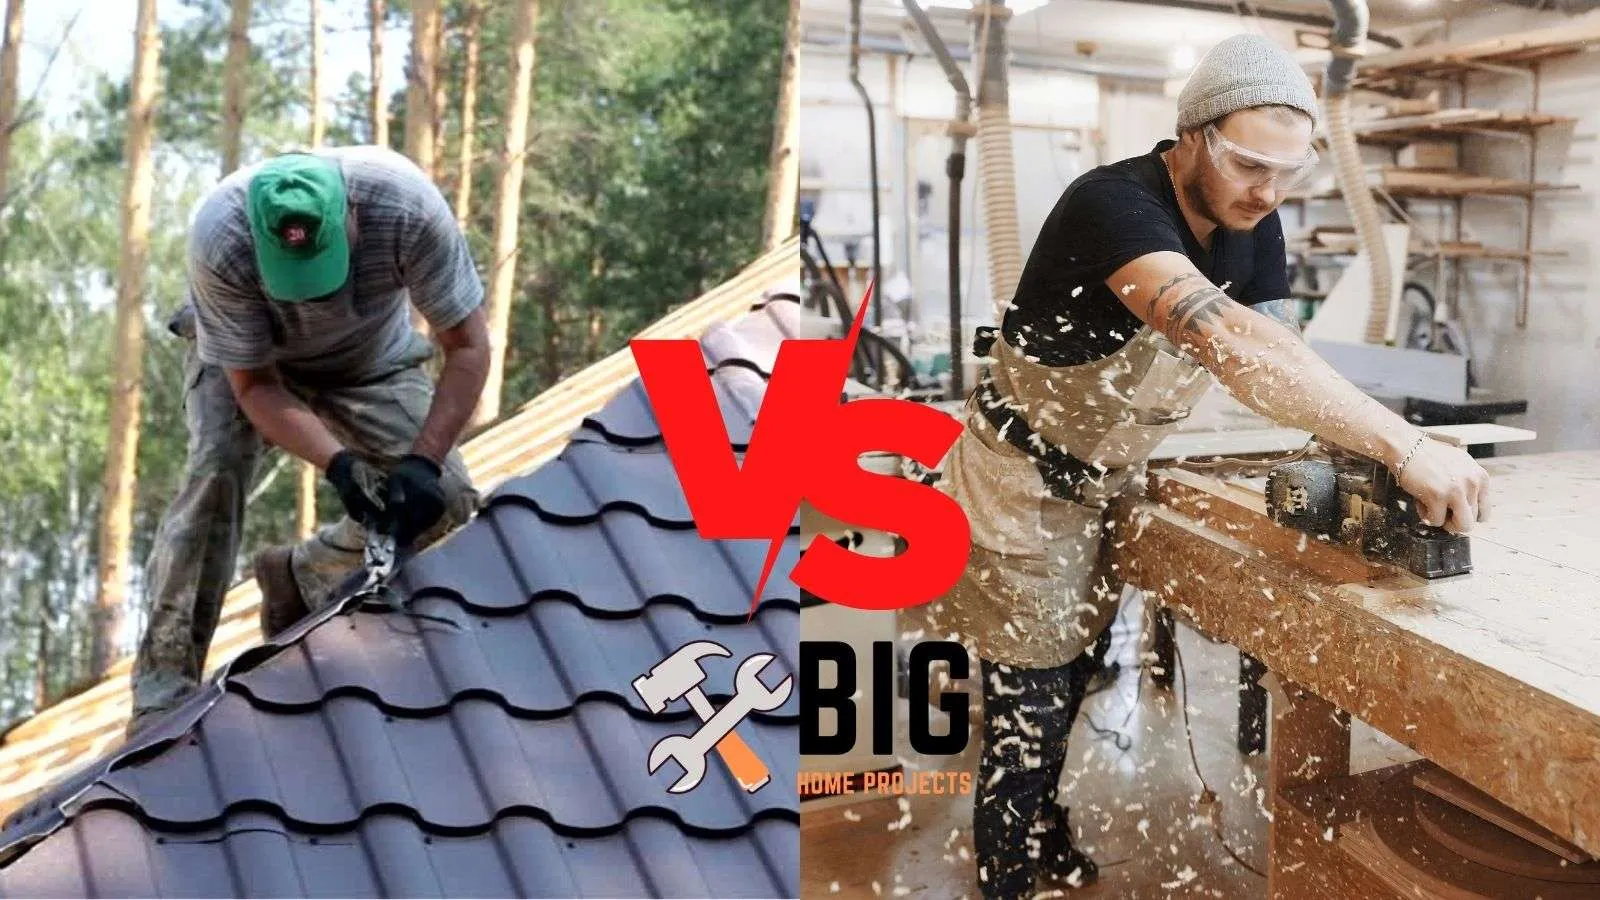 Roofer vs carpenter - bighomeprojects.com